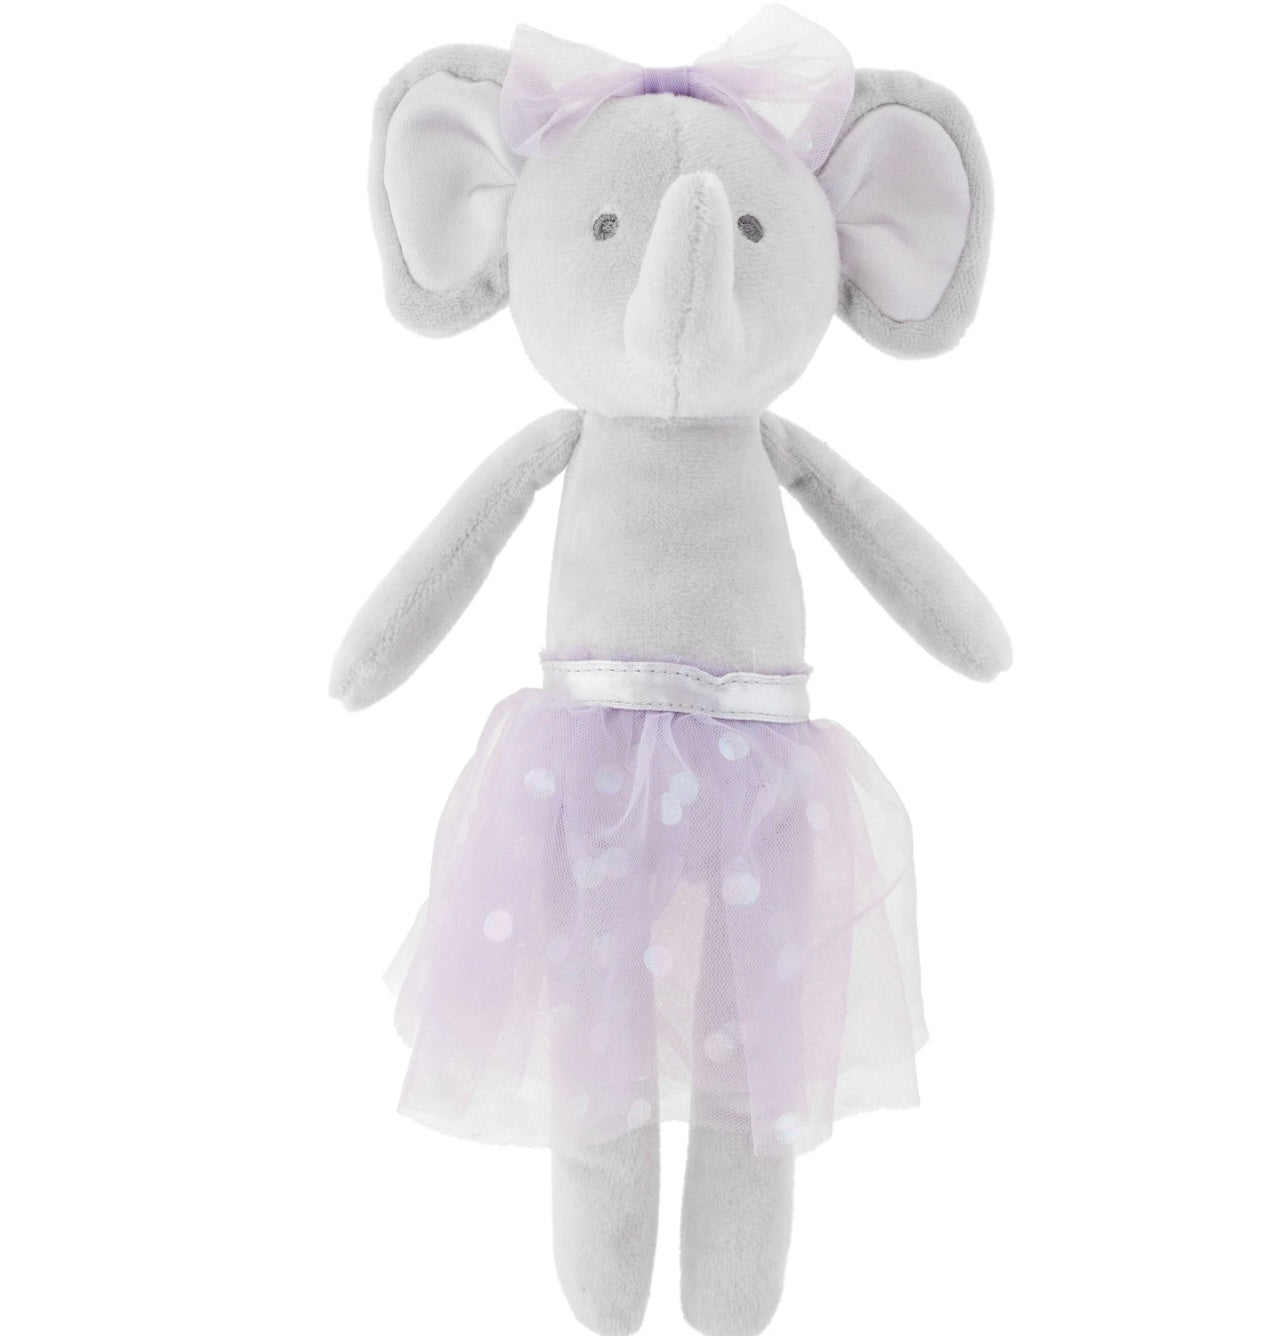 Super Soft Plush Dolls - Small Elephant